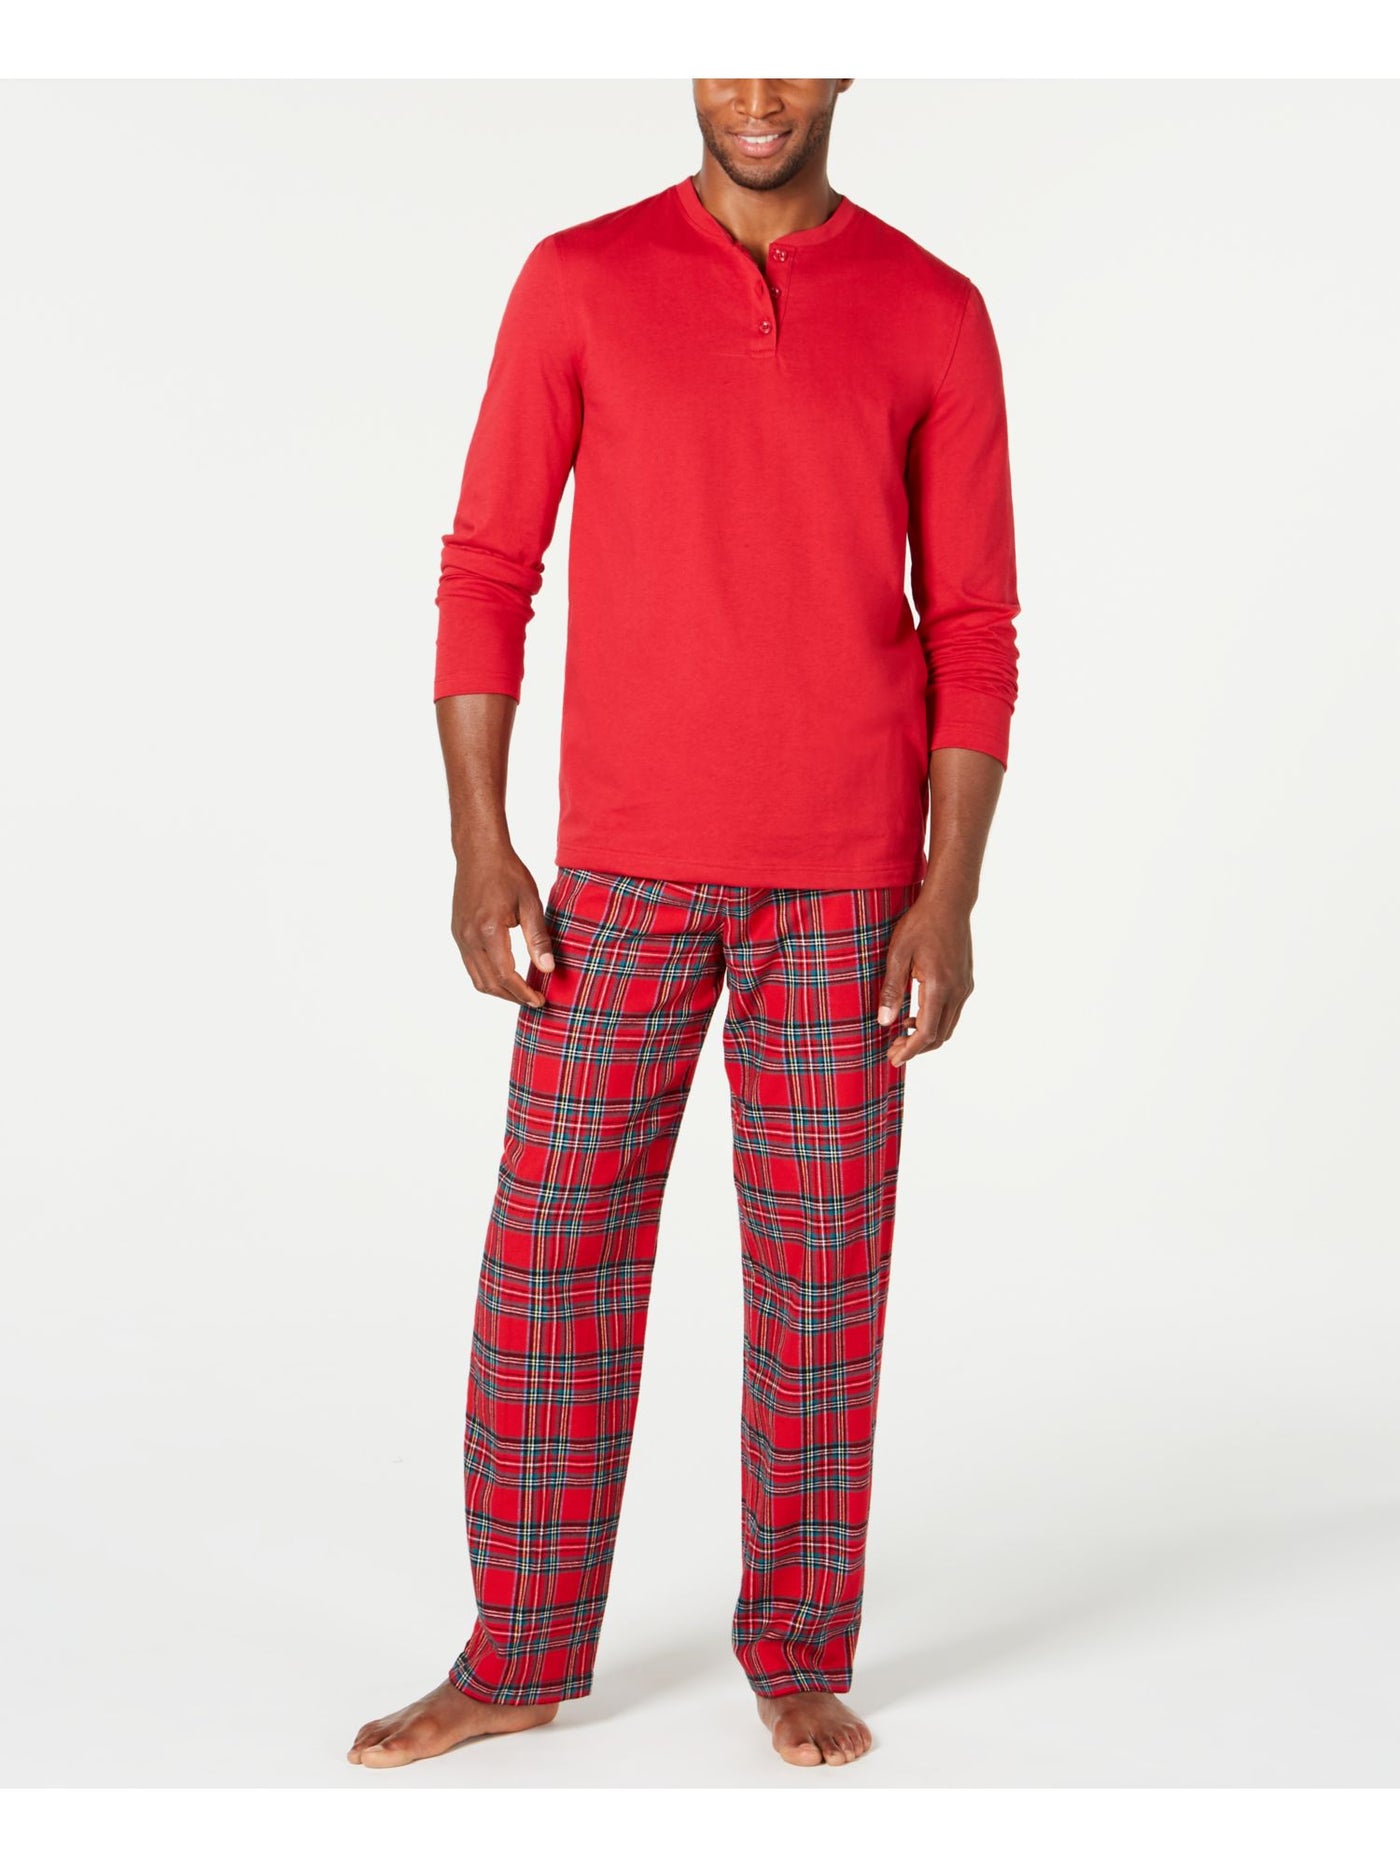 FAMILY PJs Mens Red Elastic Band Long Sleeve T-Shirt Top Straight leg Pants Pajamas S